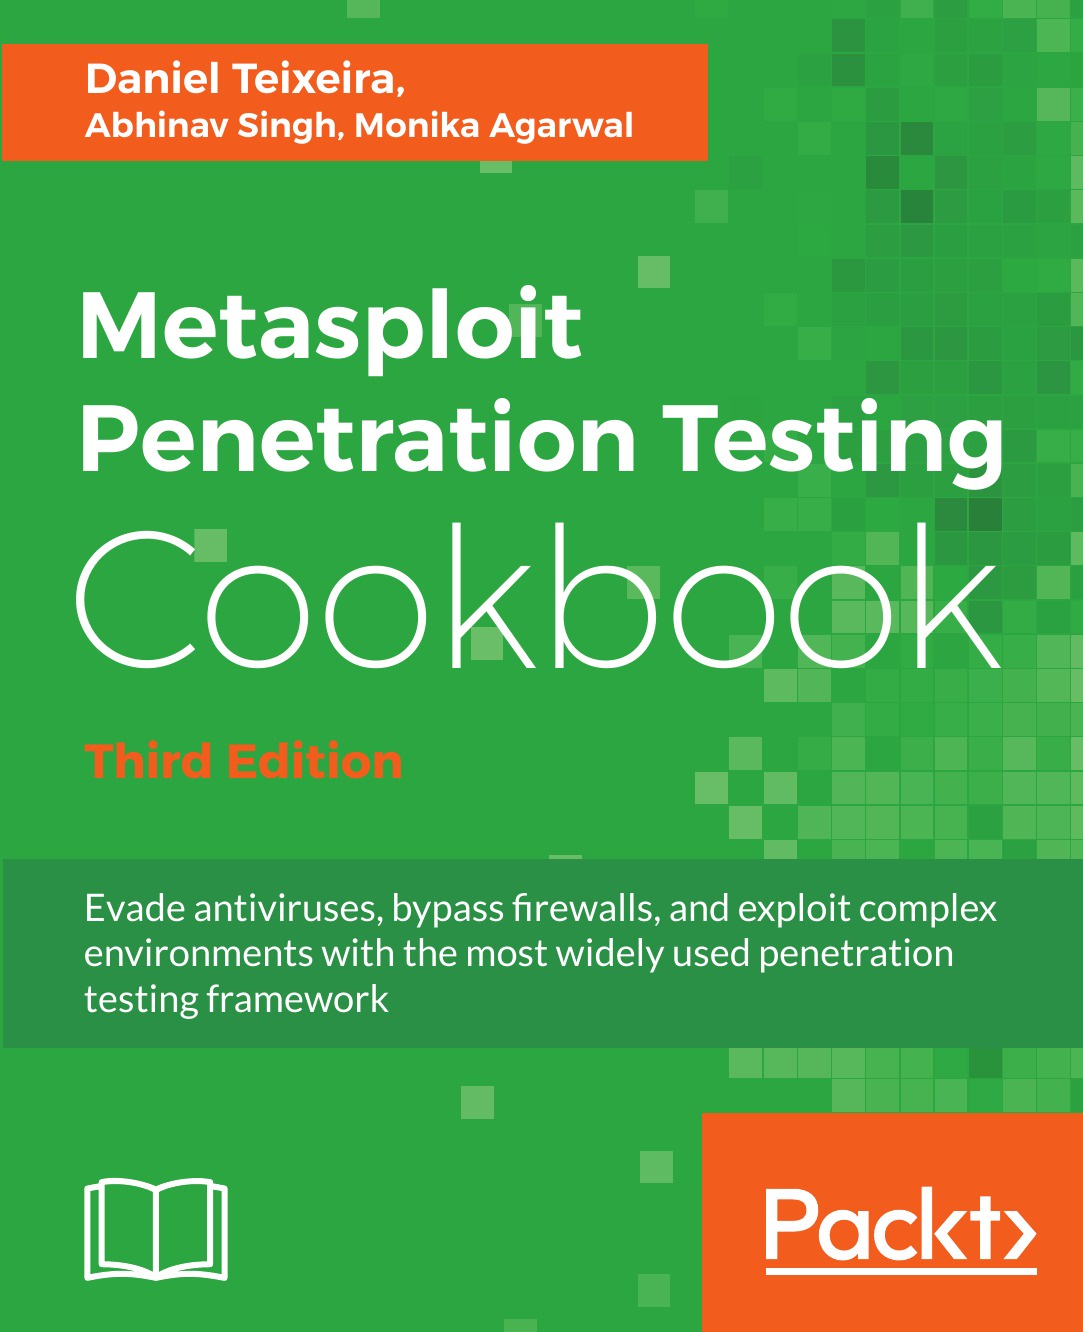 Daniel Teixeira, Abhinav Singh, Monika Agarwal Metasploit Penetration Testing Cookbook - Third Edition